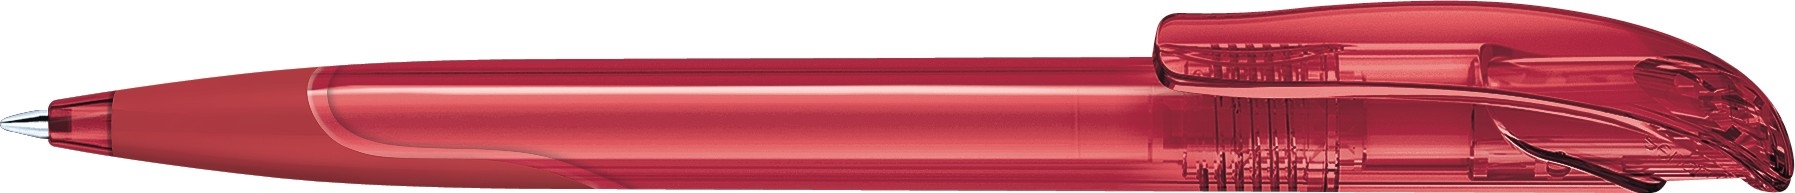  2597 ШР  Challenger Clear Soft т.красный 201, красный, пластик